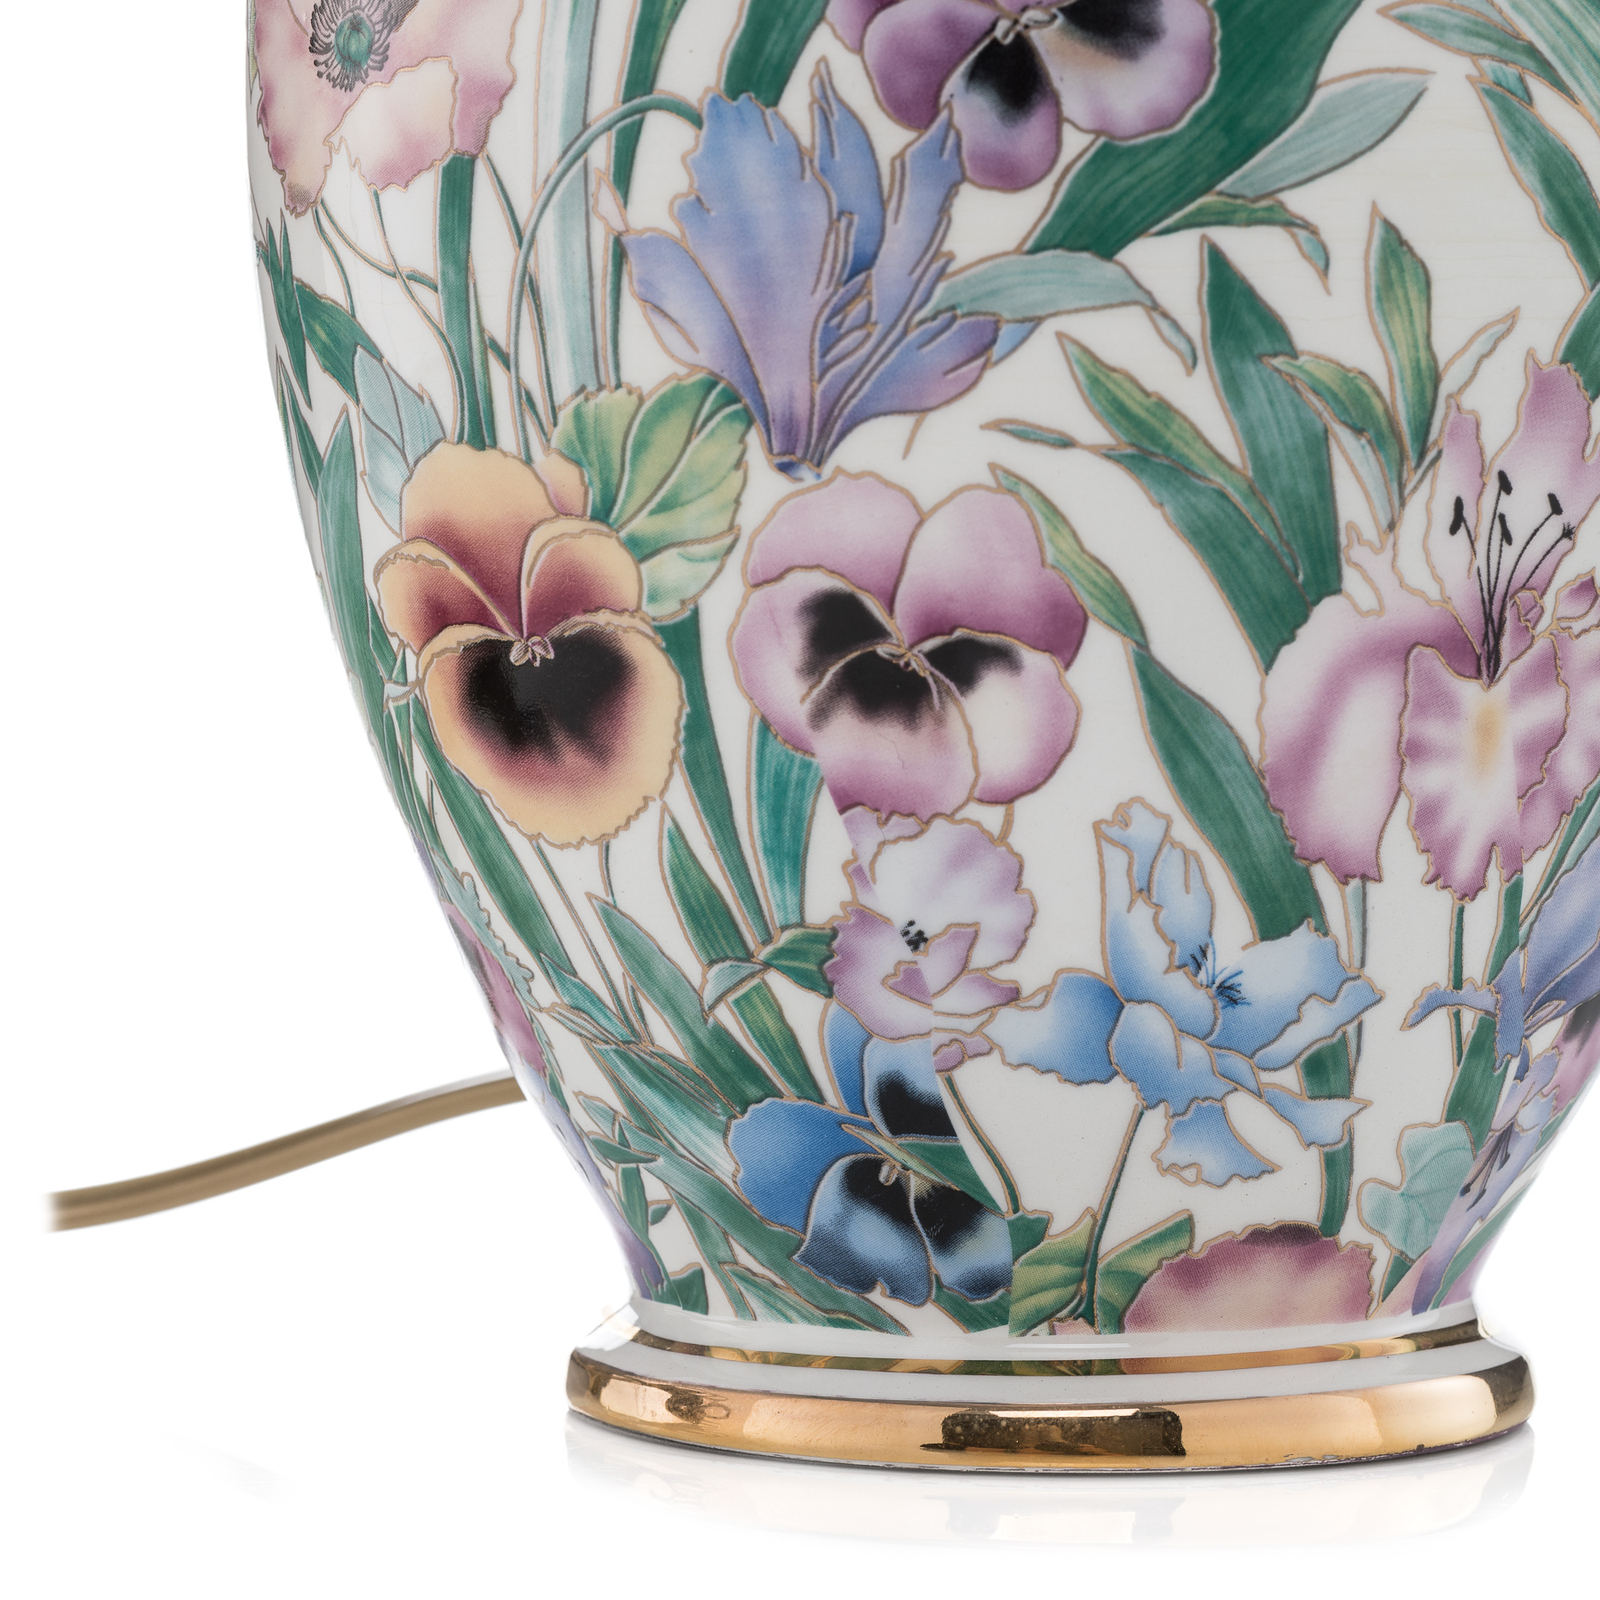 KOLARZ Giardino Panse - lampe à poser florale 30cm